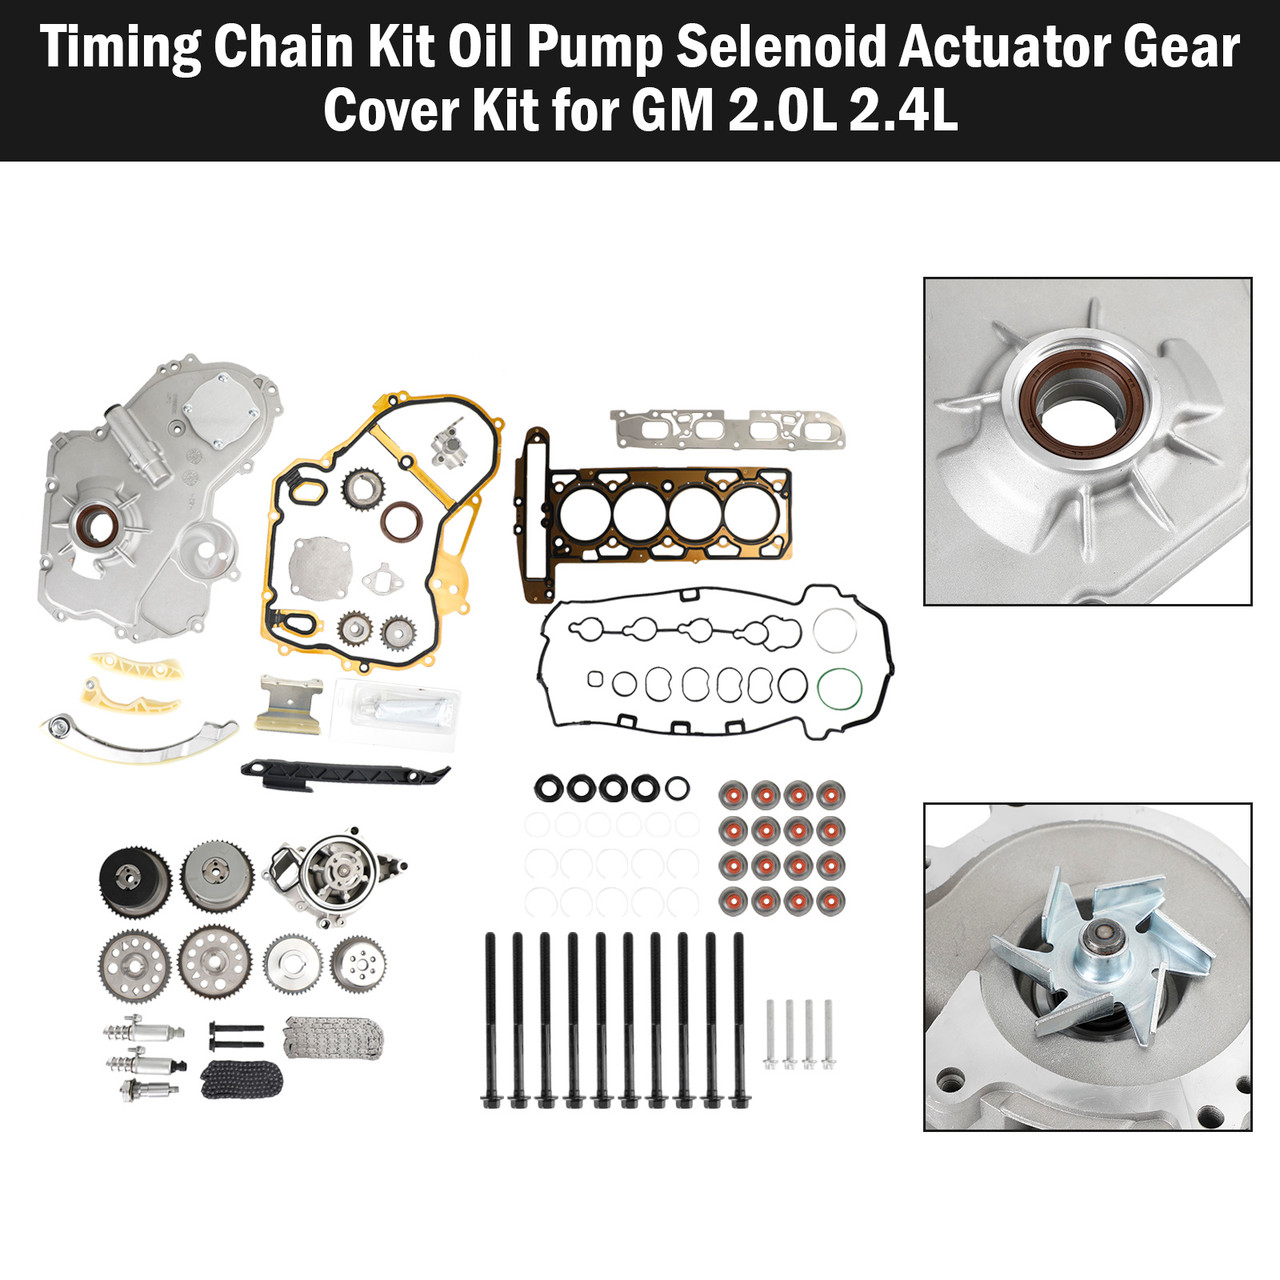 2010 GMC TERRAIN 2.4L Timing Chain Kit Oil Pump Selenoid Actuator Gear Cover Kit